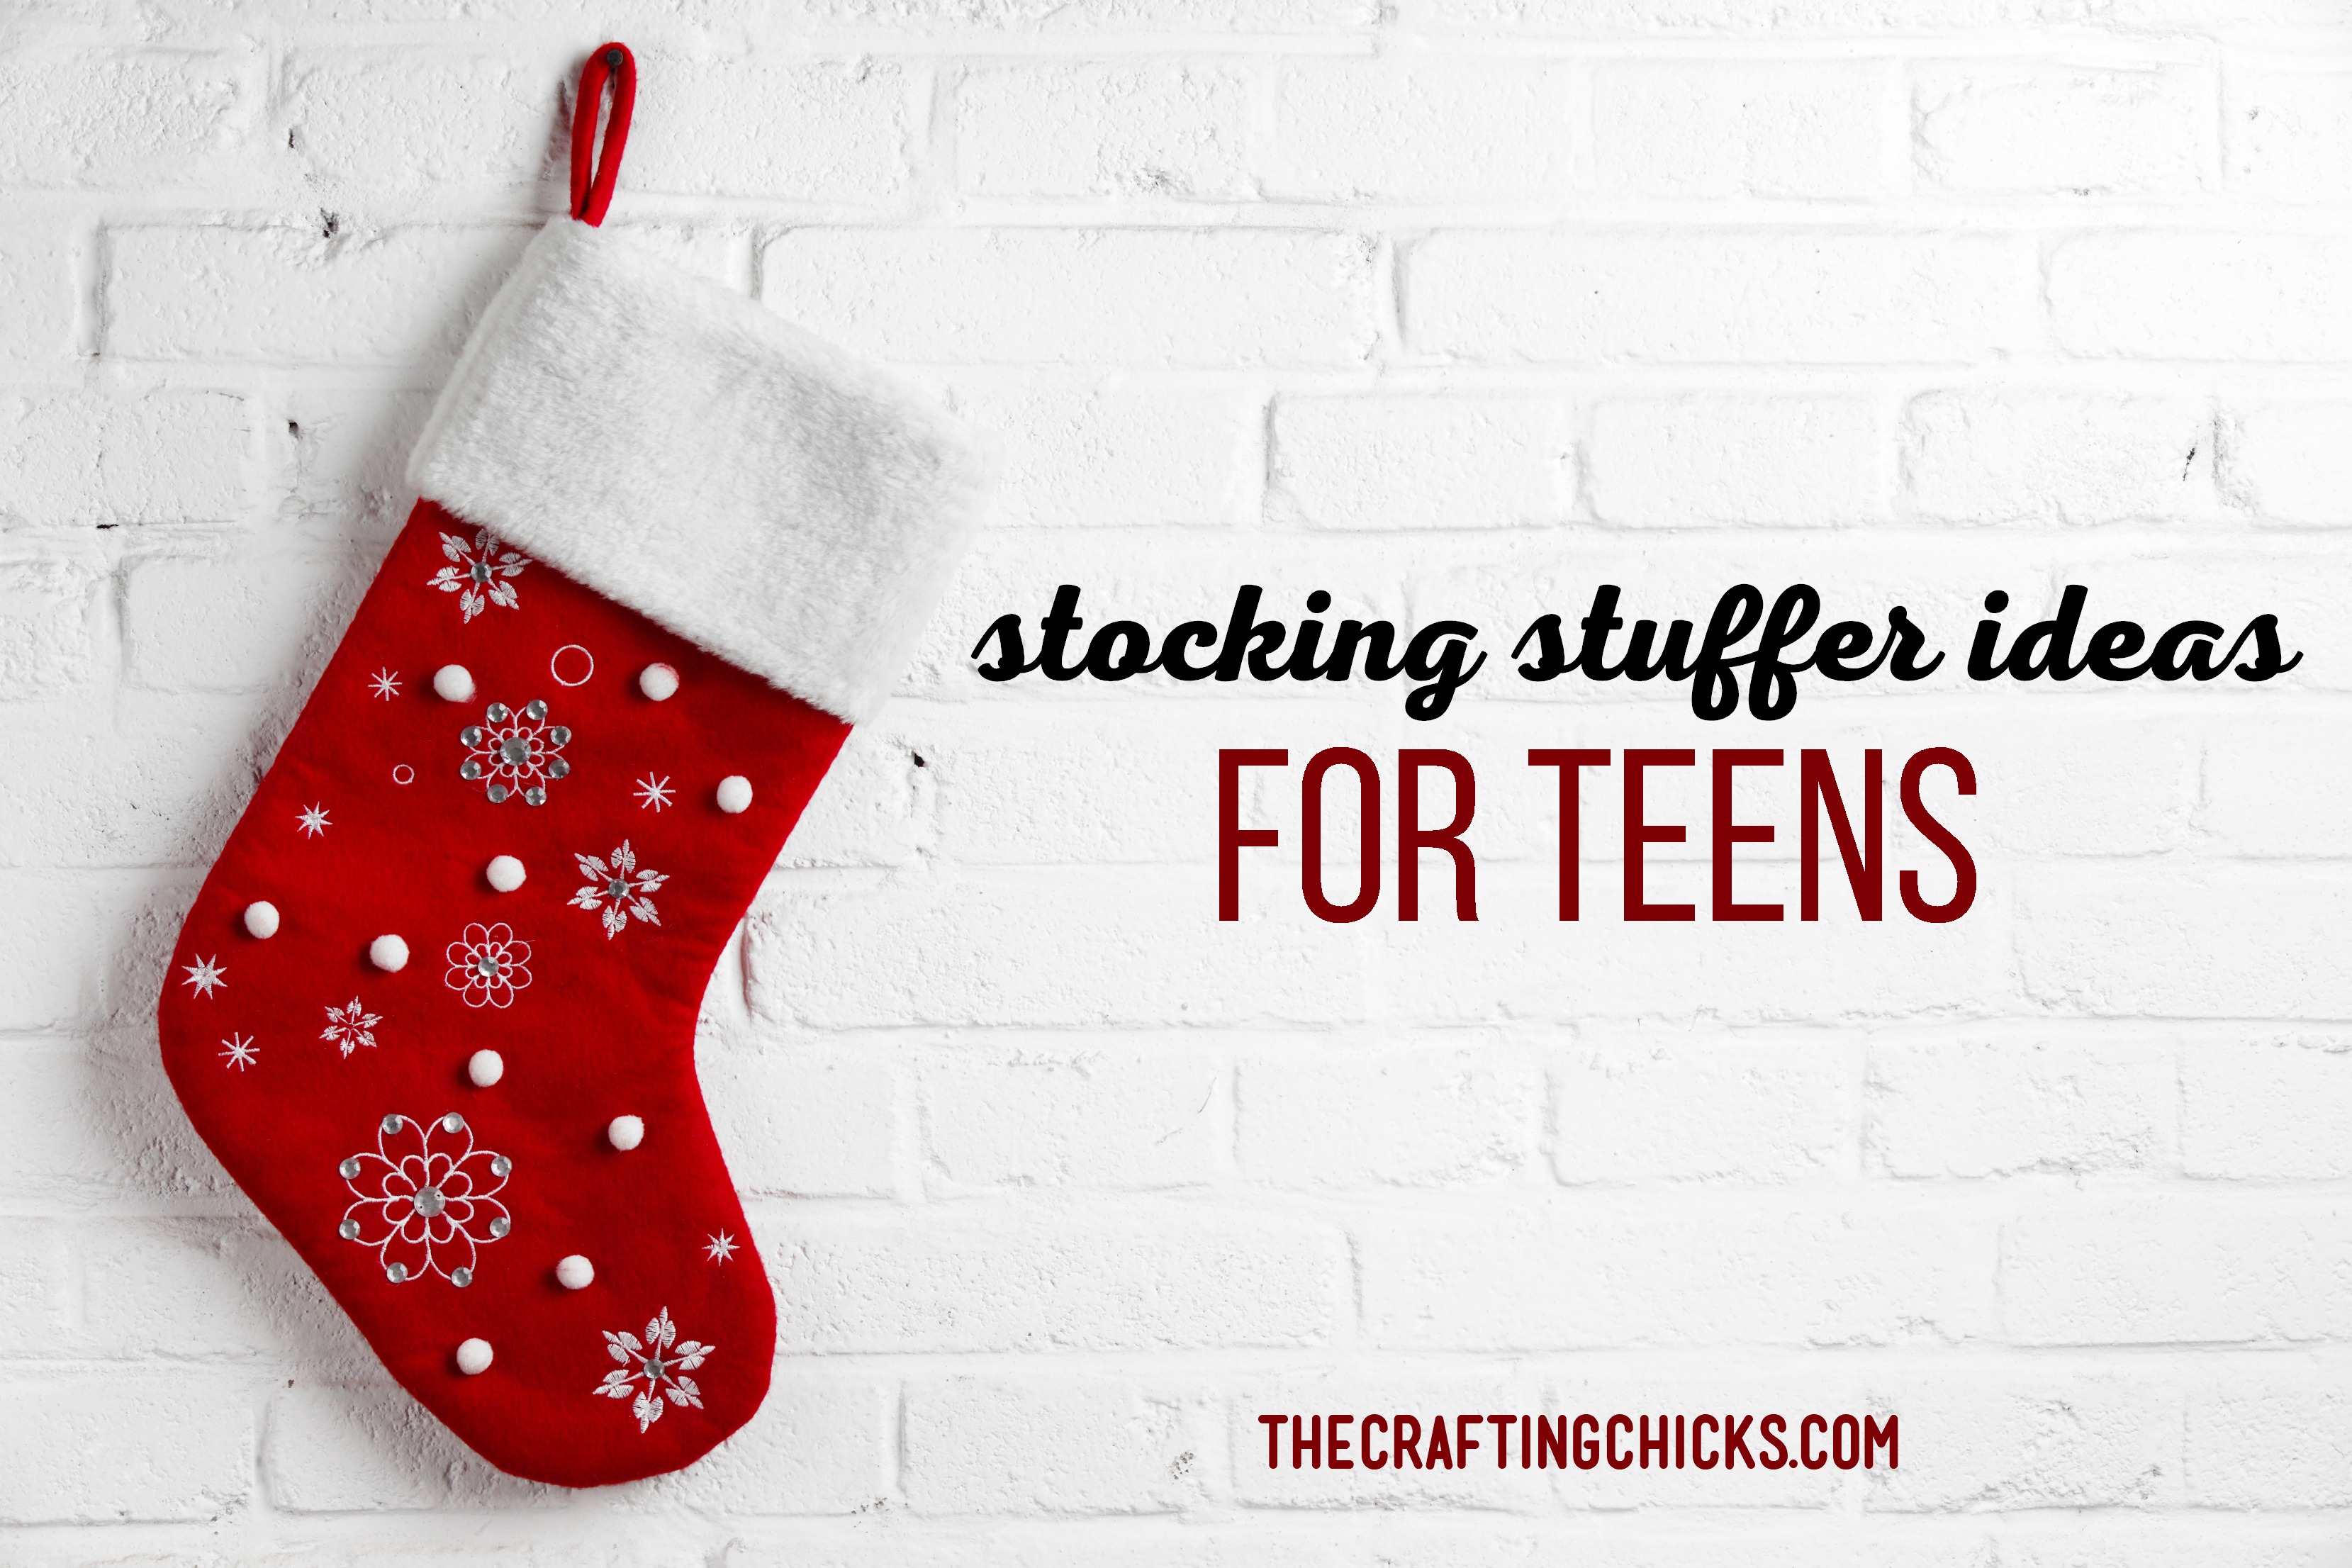 https://thecraftingchicks.com/wp-content/uploads/2017/11/Stocking-Stuffer-Ideas-for-Teens-Blog-Edited.jpg